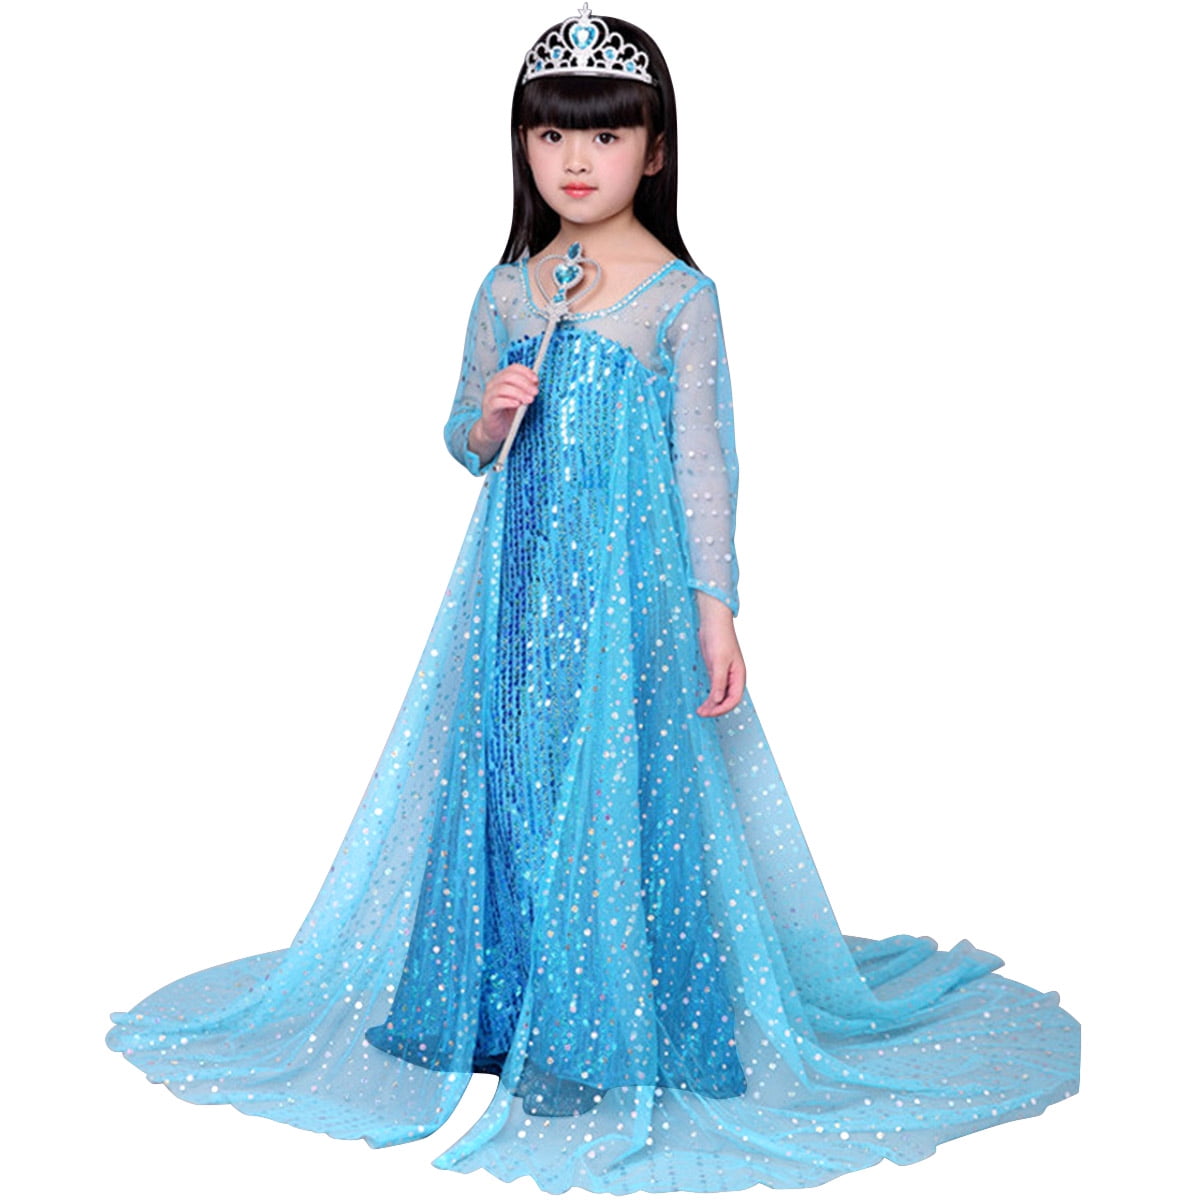 Girls Frozen Elsa Princess Fancy Dress Cape Party Costume Outfit Christmas Gift 